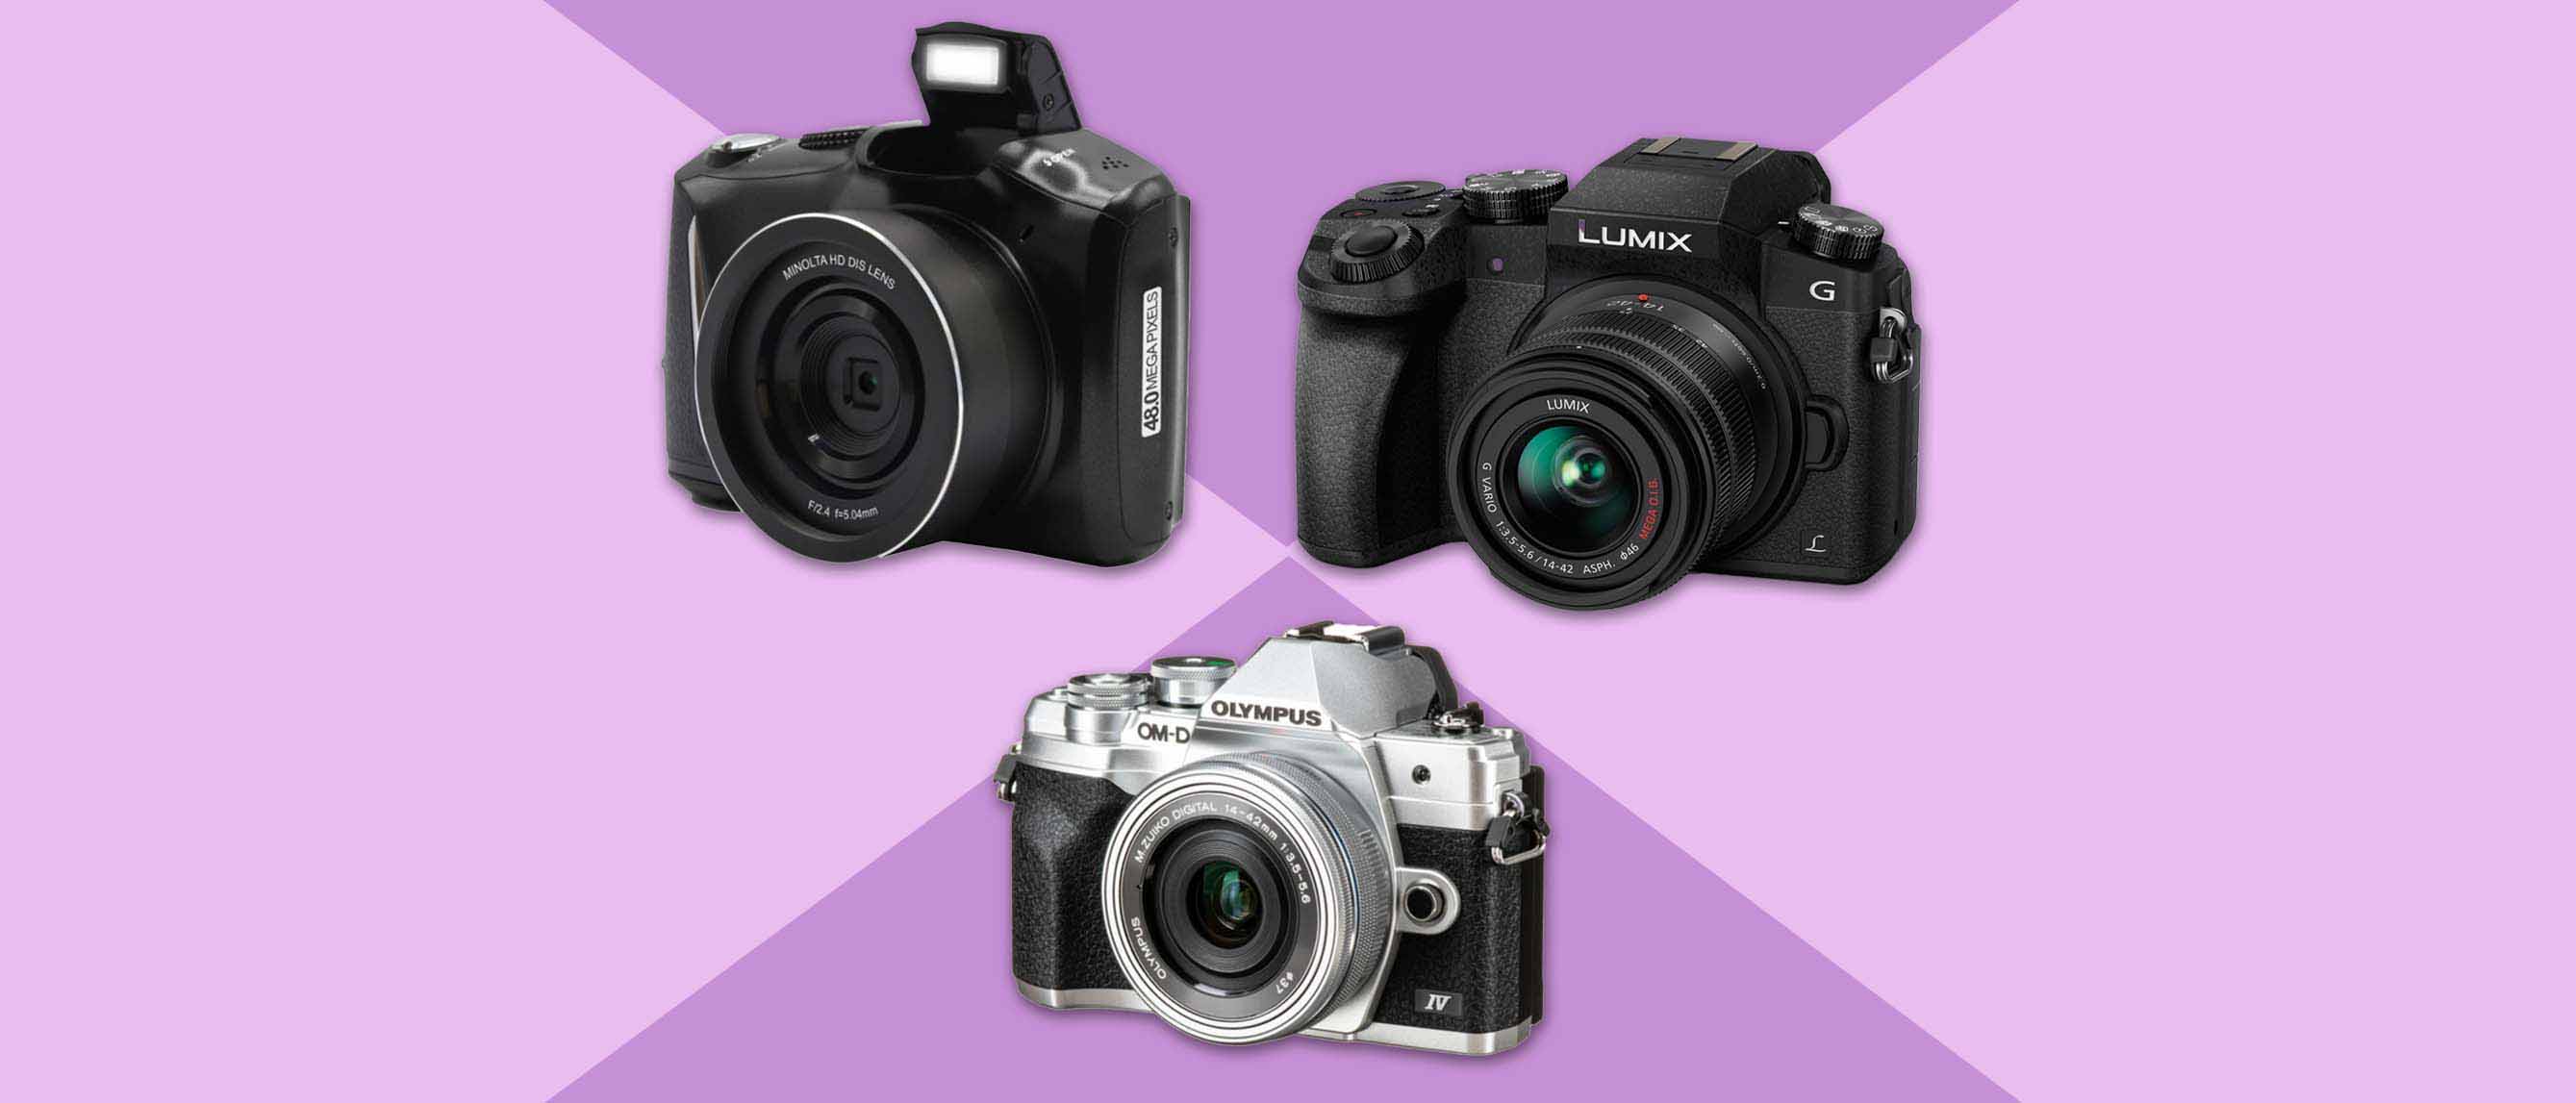 Image of 3 cameras including Minolta, Lumix and Olympus